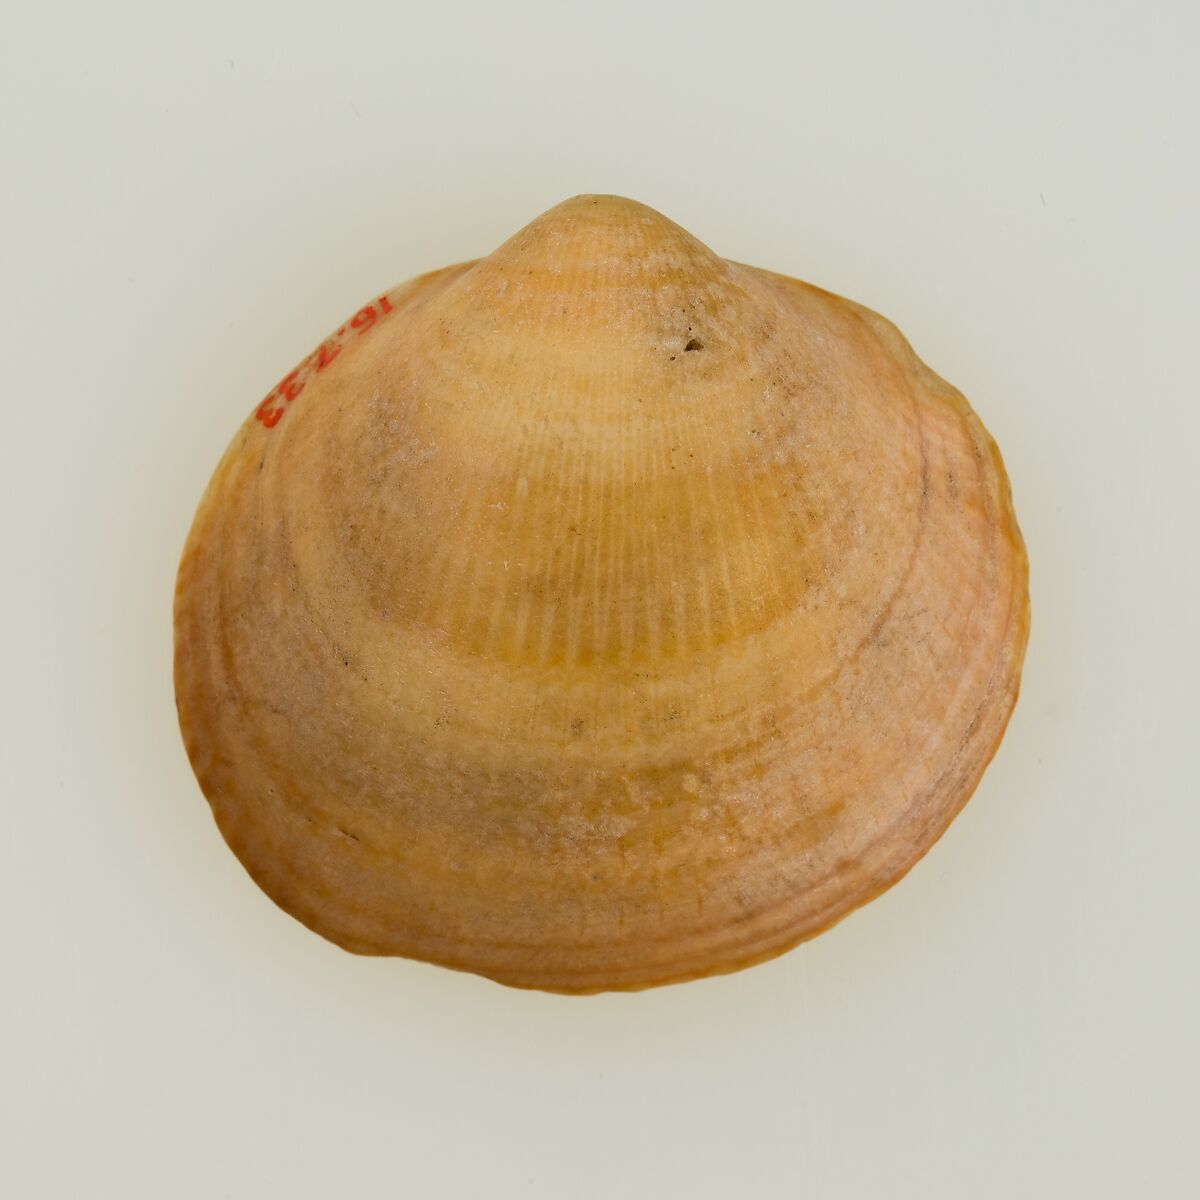 Shell pendant or bead, Shell 